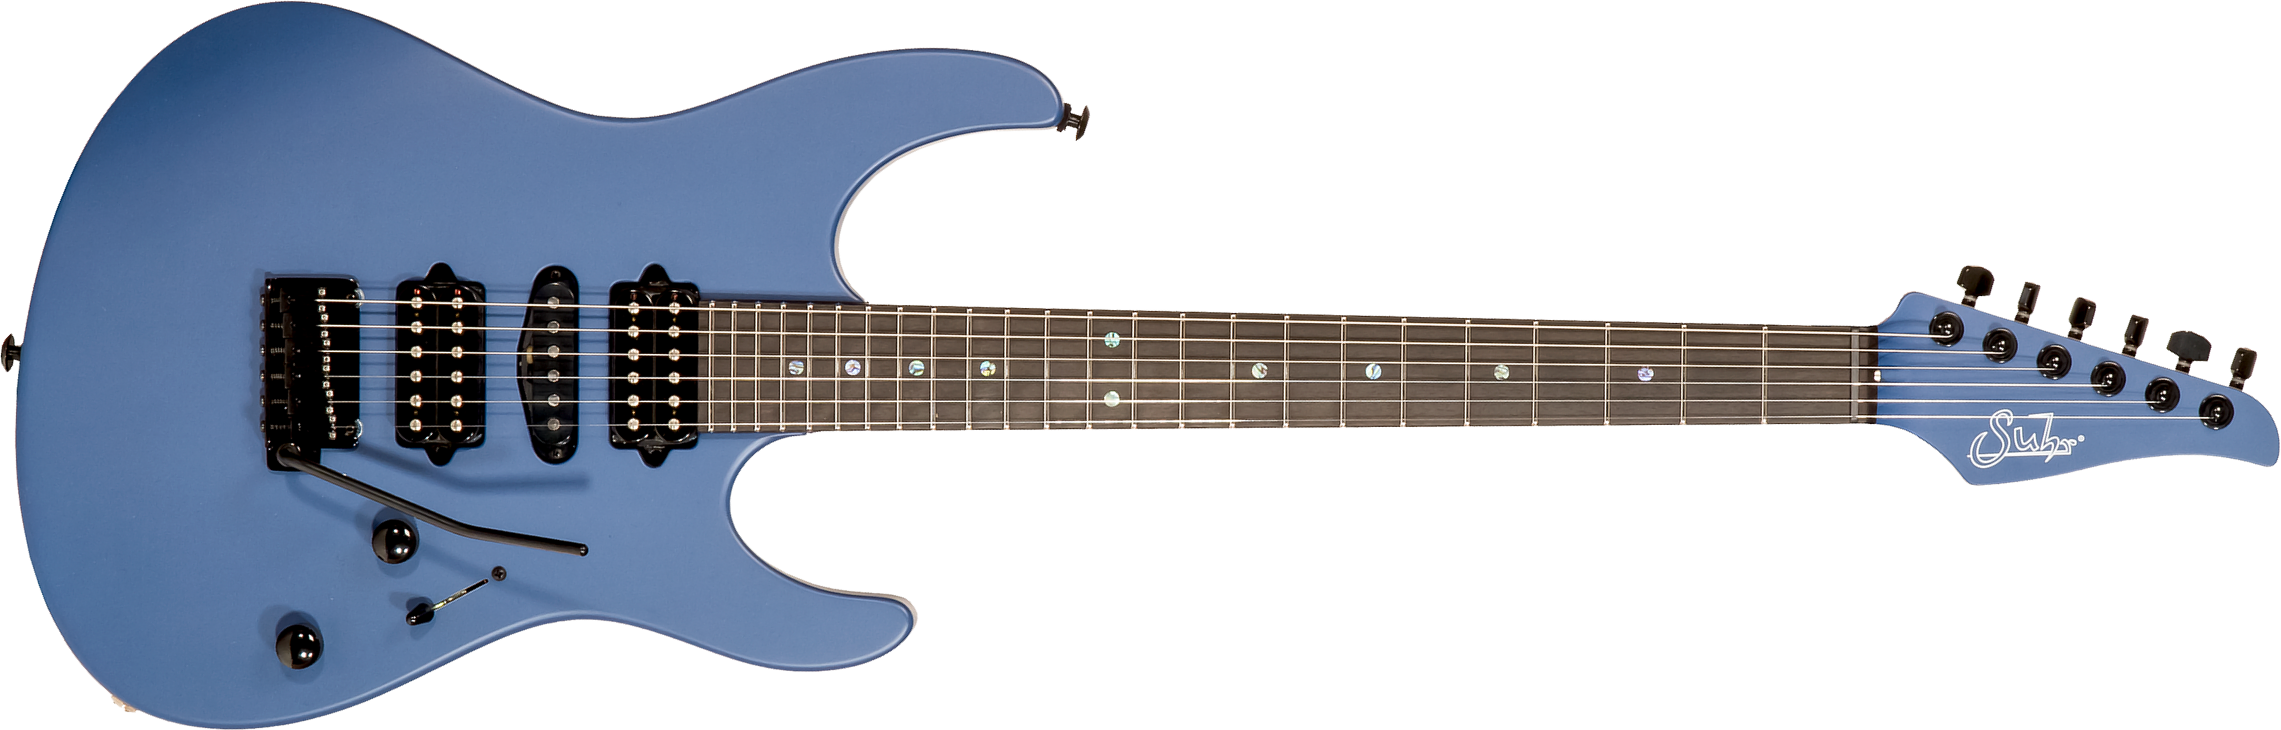 Suhr Modern Terra Ltd 01-ltd-0014 Hsh Trem Eb #72766 - Deep Sea Blue Satin - Str shape electric guitar - Main picture